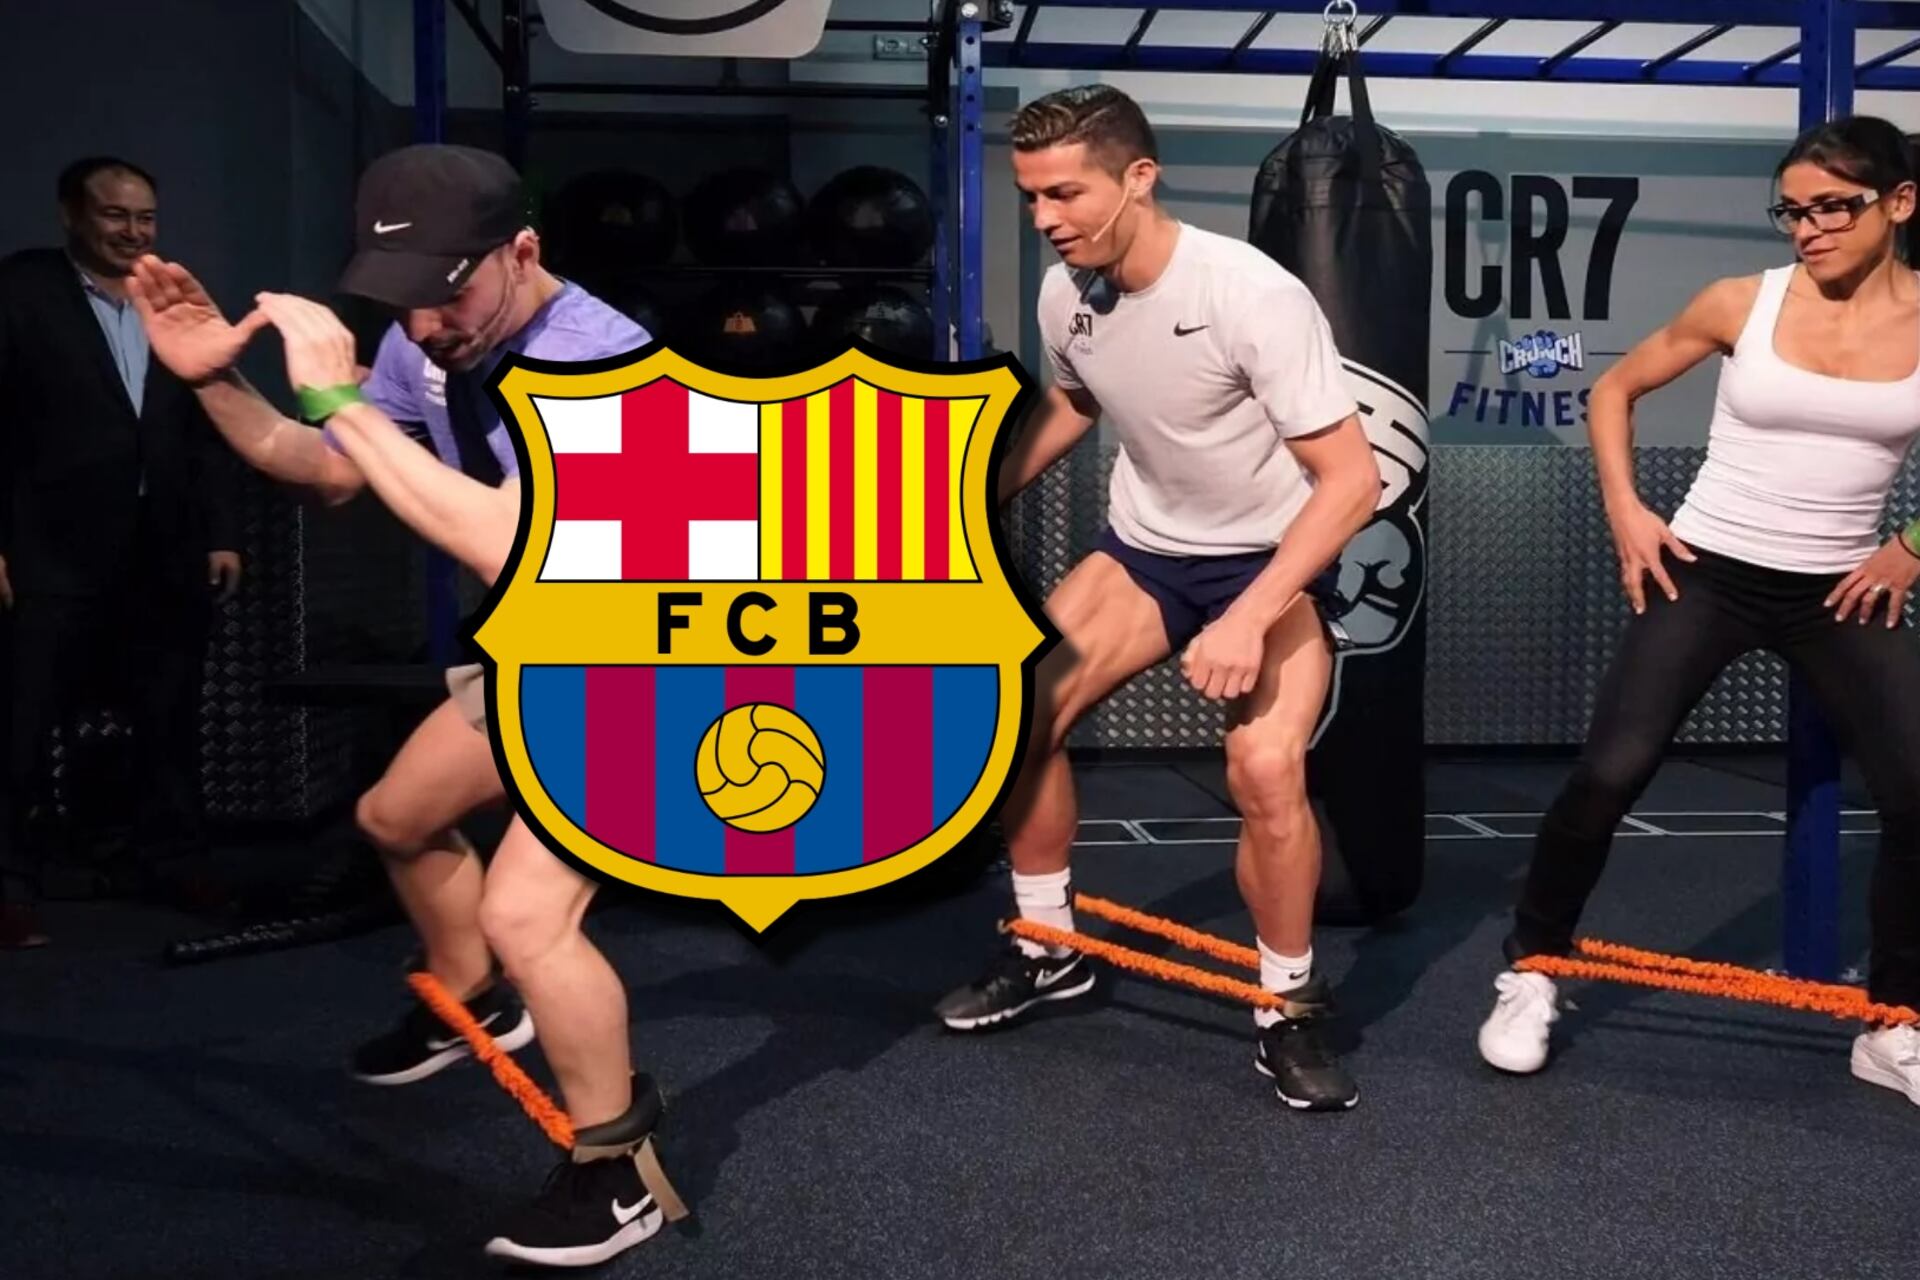 Ni CR7 se atrevió a tanto, el jugador del Barça que entrenó en el gym a las 4 am